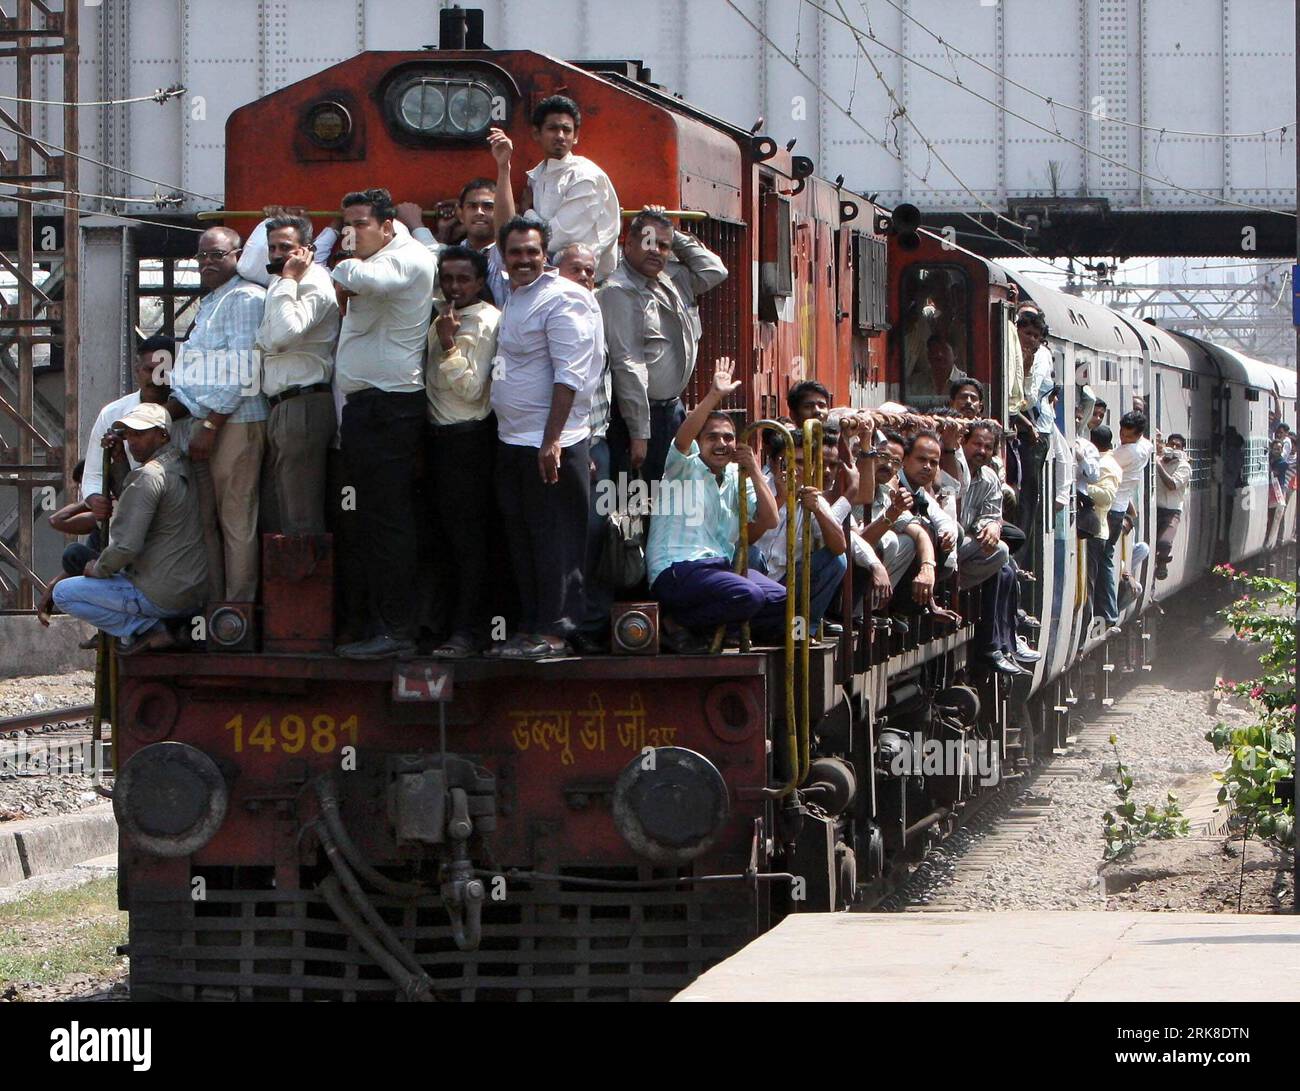 Bildnummer: 54022757  Datum: 04.05.2010  Copyright: imago/Xinhua (100504) -- MUMBAI, MAY 4th 2010 (Xinhua) -- ride on a special train following the strike of train drivers in Mumbai, India, May 4, 2010. Train drivers in Mumbai went for a strike on Tuesday, leaving thousands of passengers stuck in the city. (Xinhua/Stringer)(zl) (3)INDIA-MUMBAI-TRAIN DRIVERS-STRIKE PUBLICATIONxNOTxINxCHN Politik Wirtschaft Bahn Verkehr Bahnstreik Lokführer Lokführerstreik kbdig xng 2010 quer premiumd xint o0 kurios o00 voll, überfüllt    Bildnummer 54022757 Date 04 05 2010 Copyright Imago XINHUA  Mumbai May 4th Stock Photo